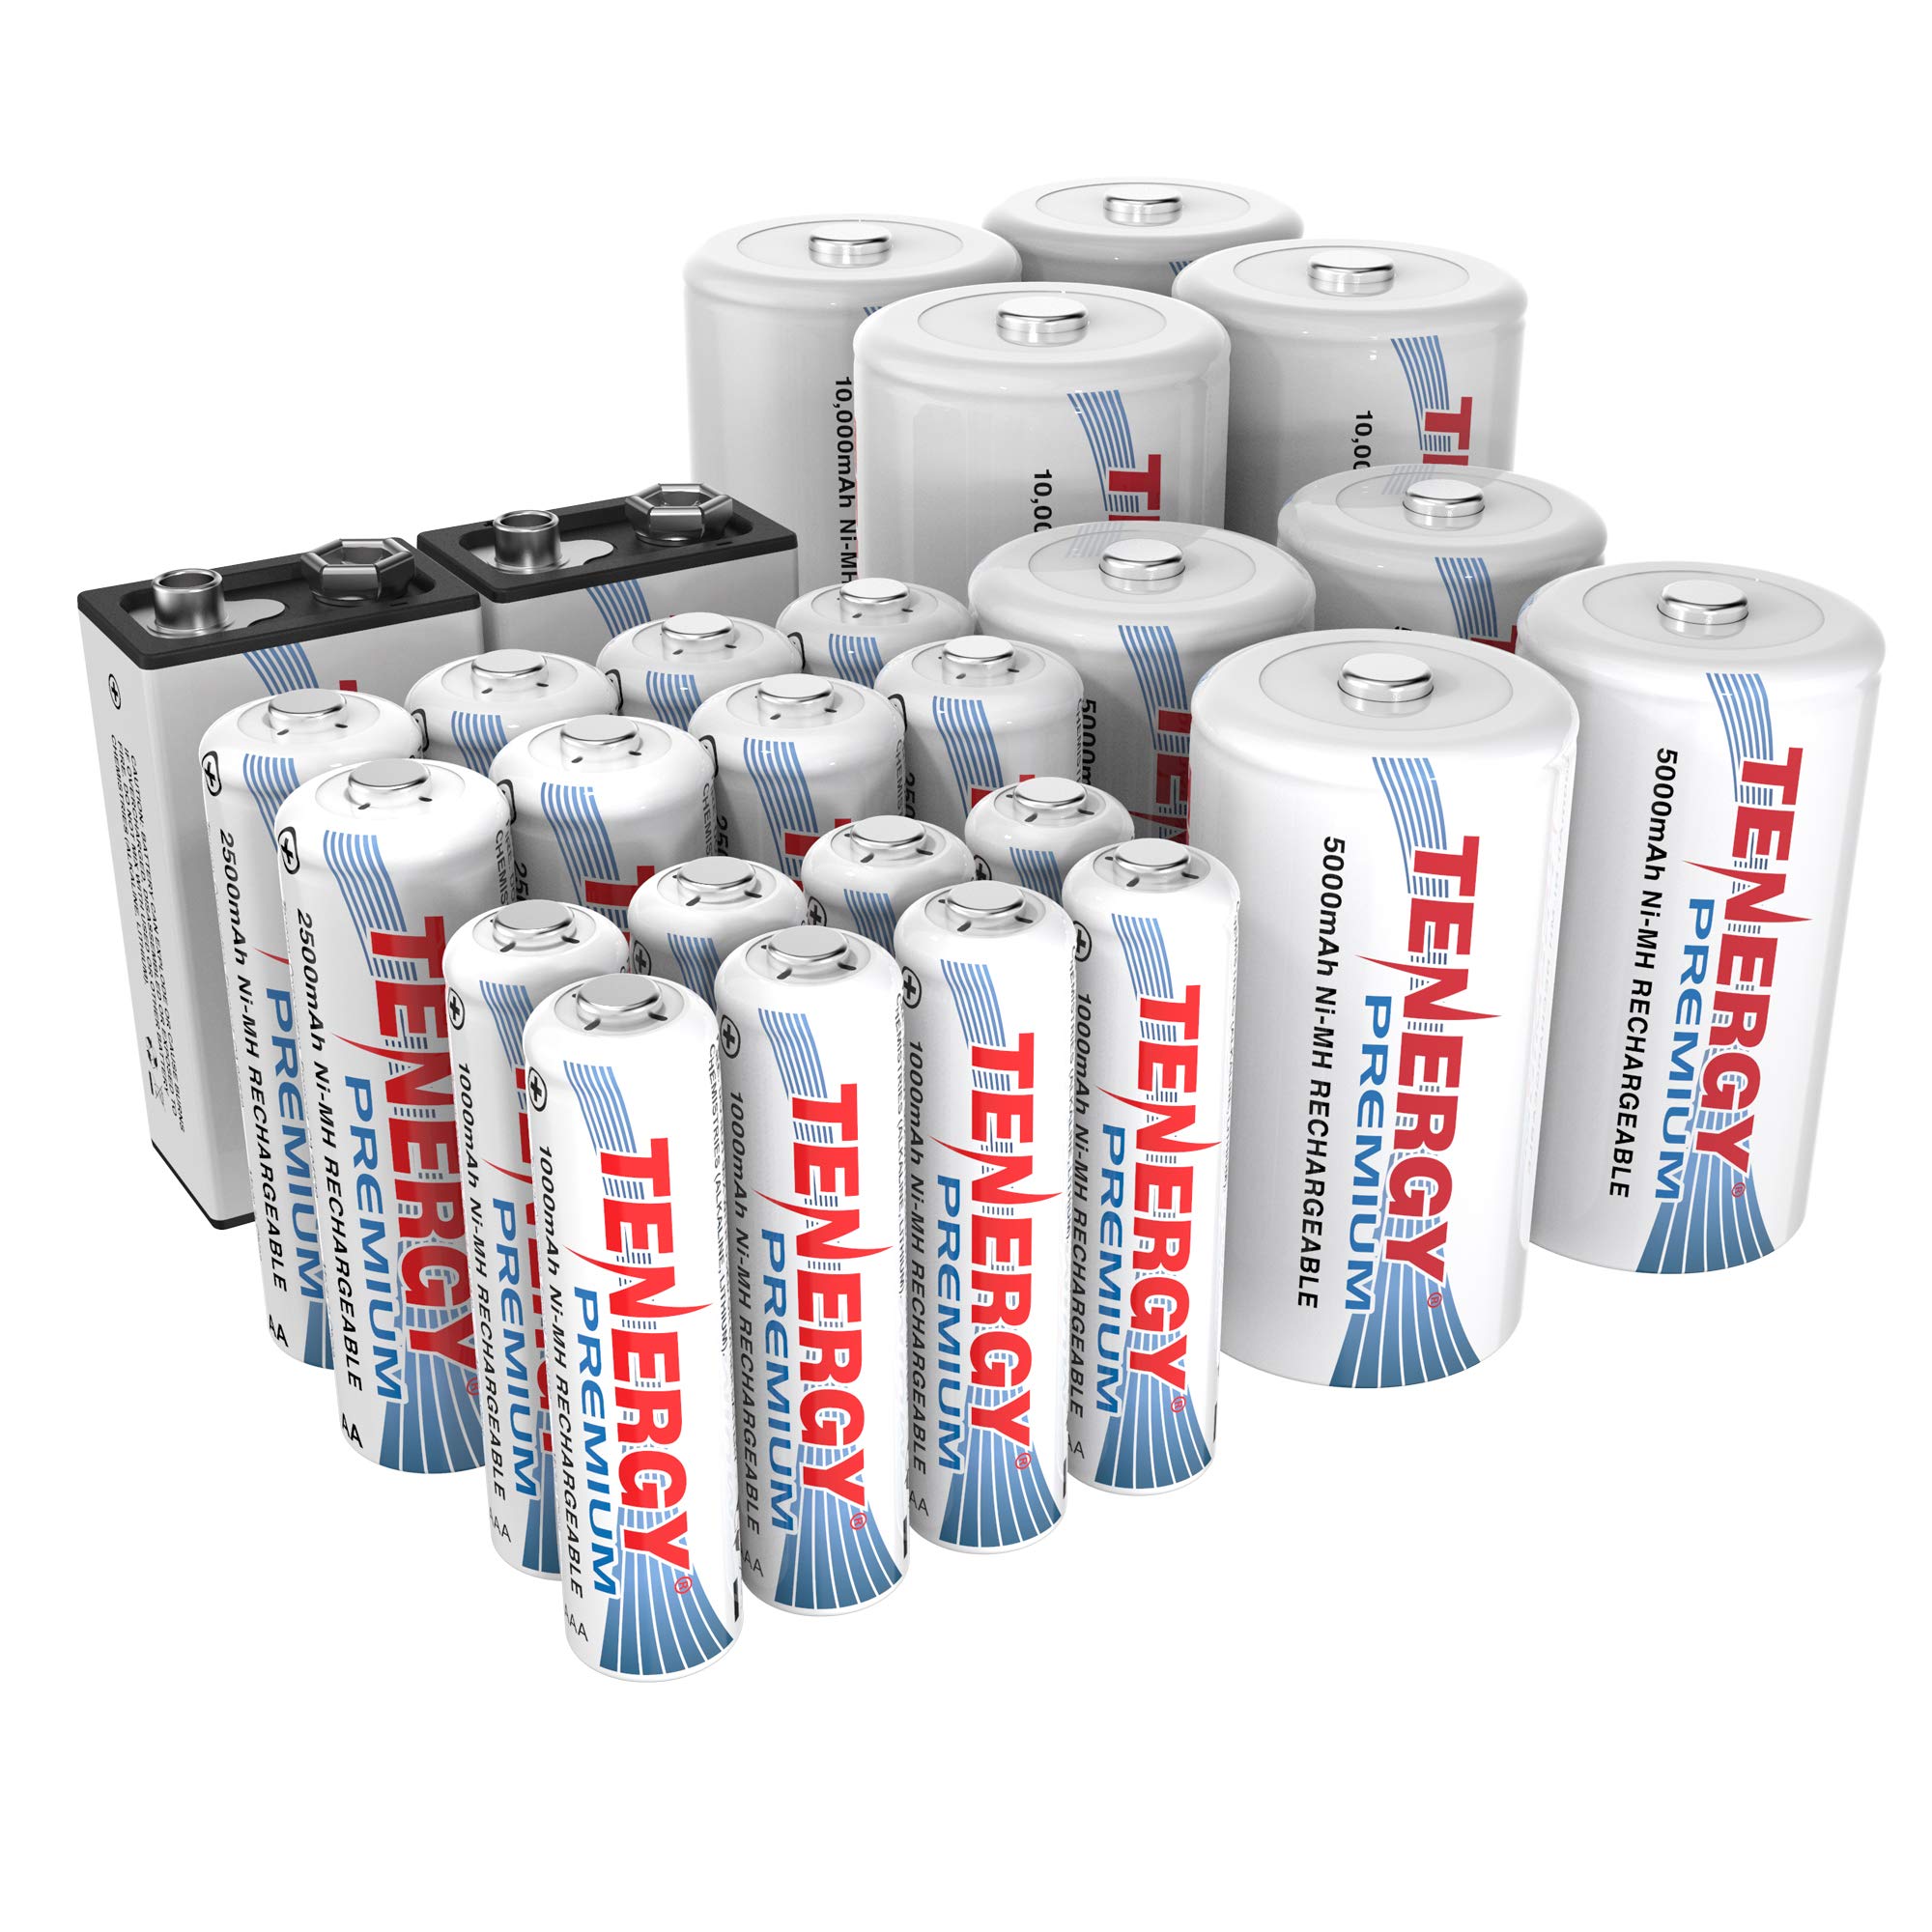 Tenergy Premium High Capacity NiMH Rechargeable Battery